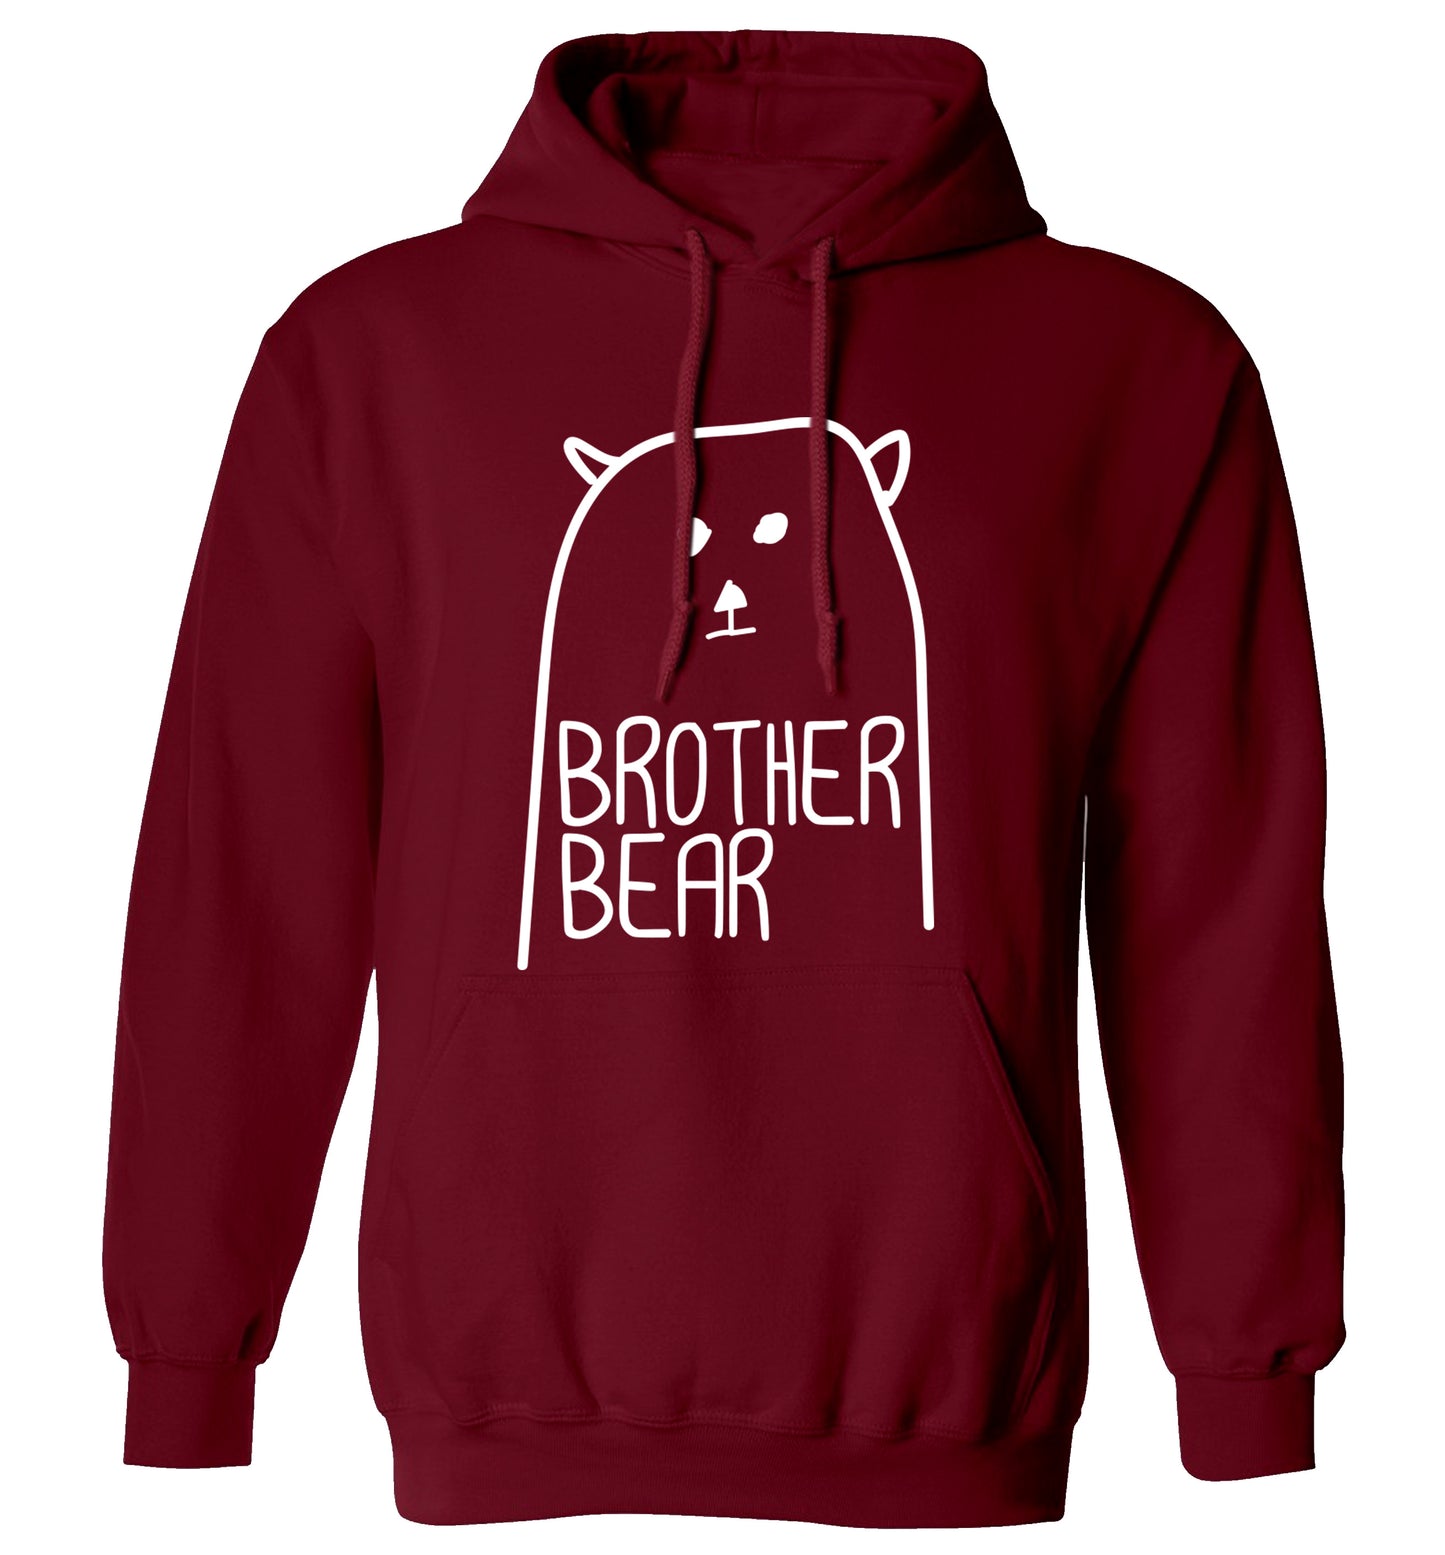 Brother bear adults unisex maroon hoodie 2XL